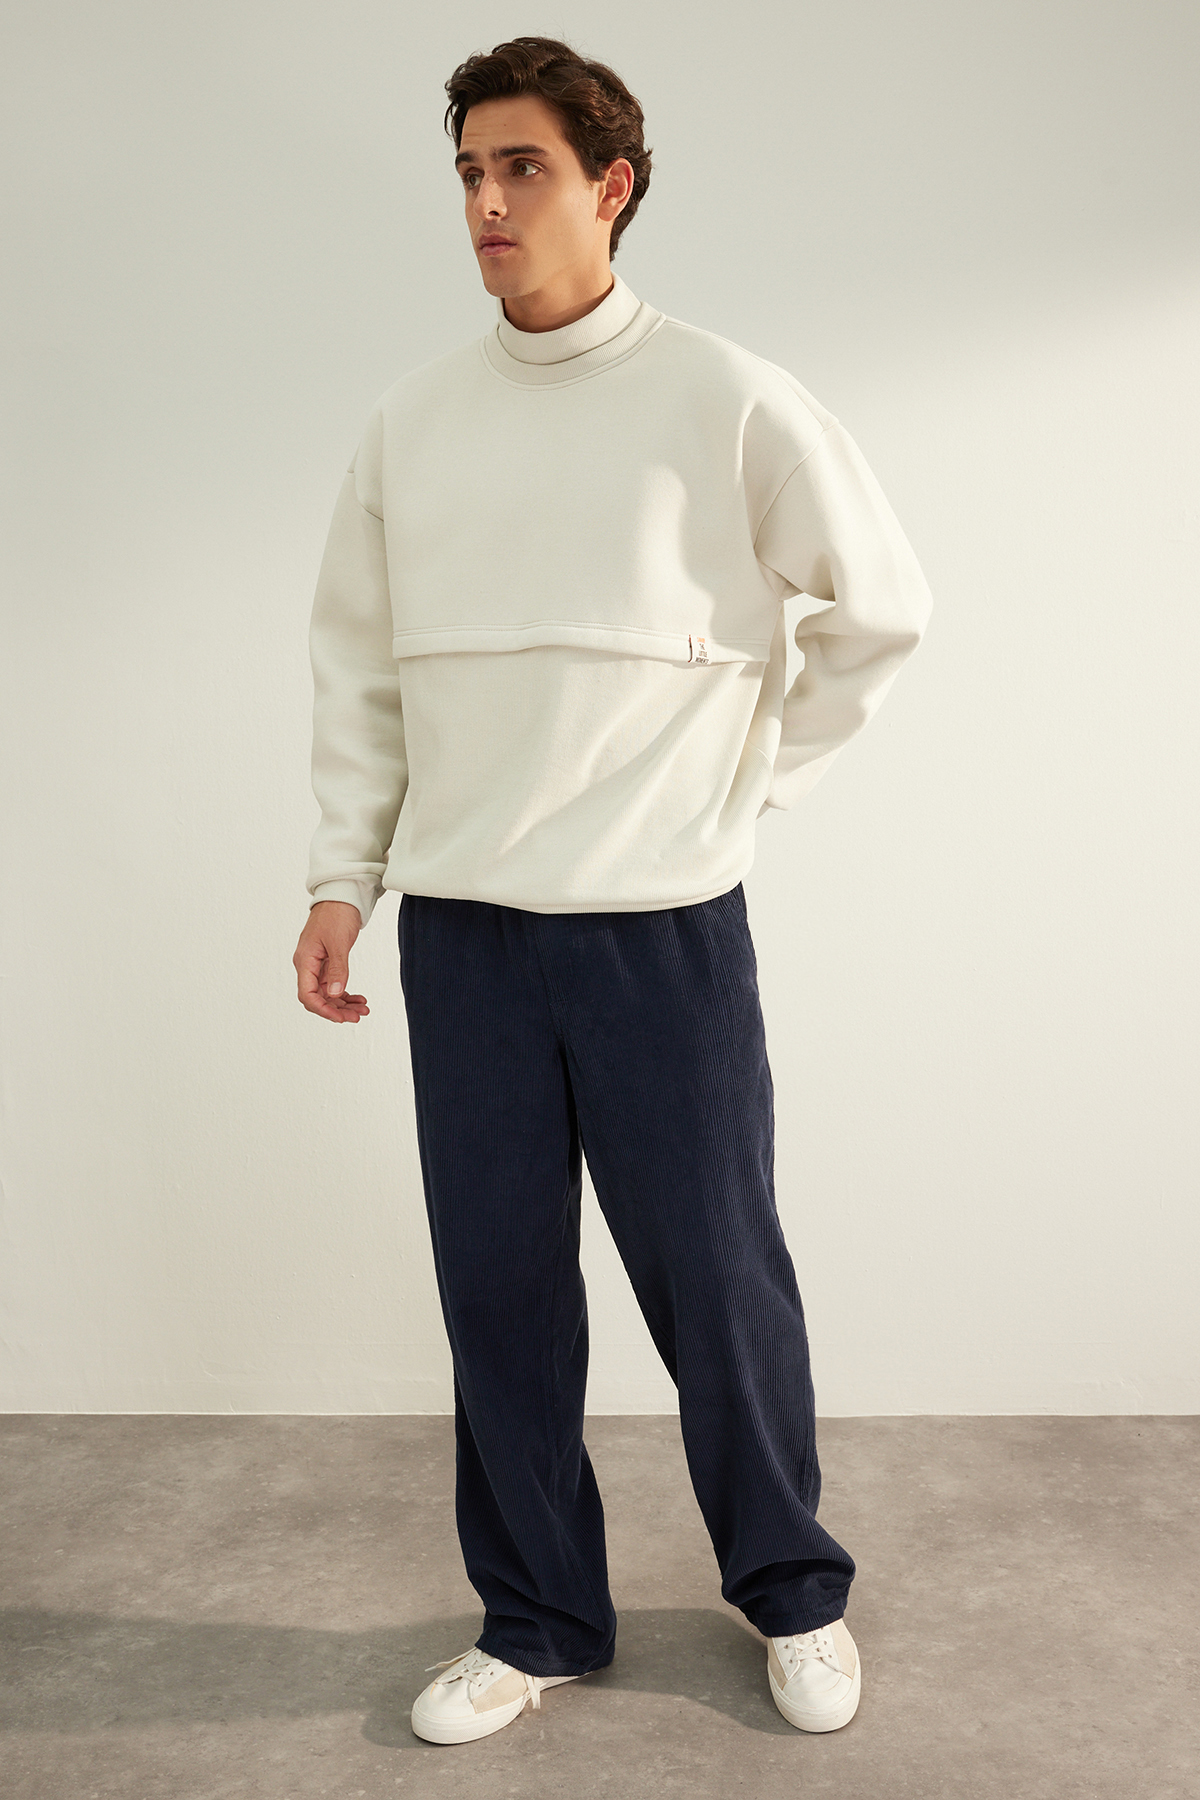 Trendyol Limited Edition Stone Oversize/Wide-Fit Labeled Fleece Filled Sweatshirt